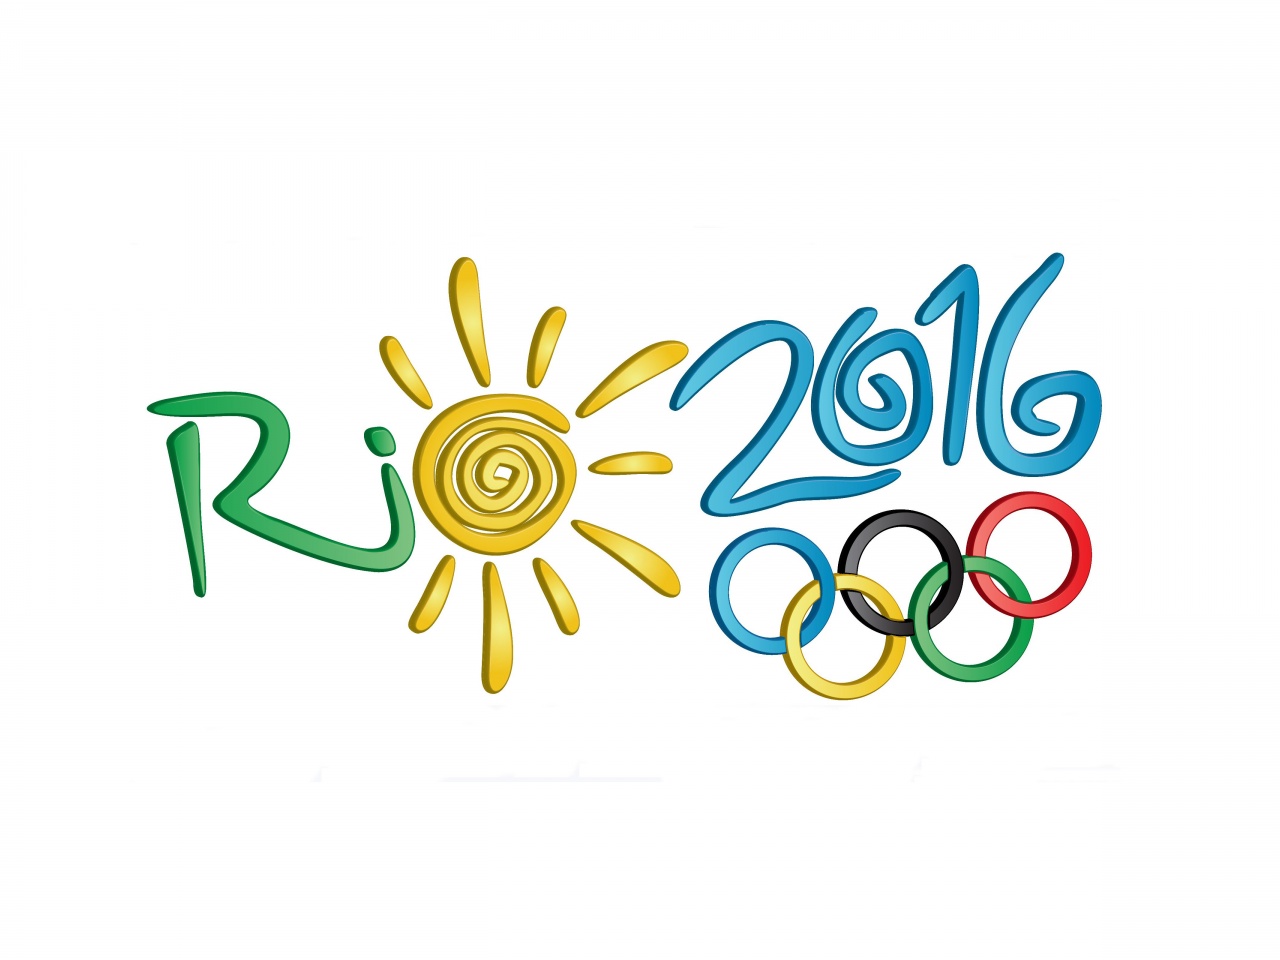 Brazil Rio 2016 Olympic Games